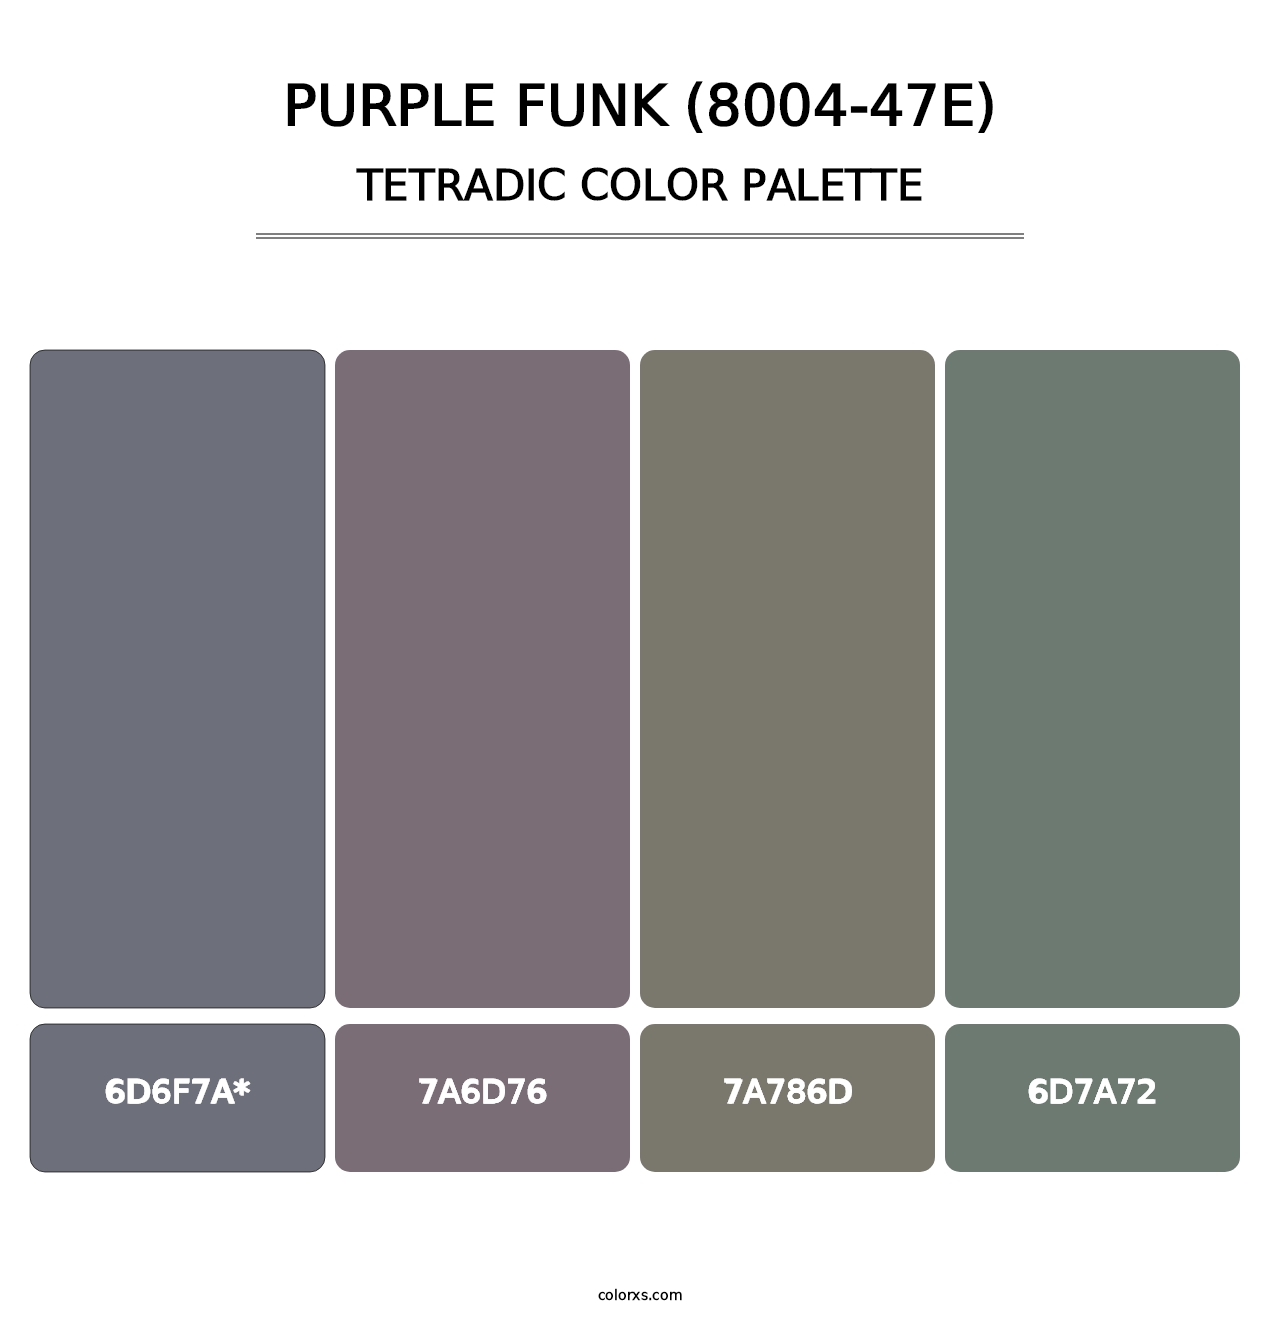 Purple Funk (8004-47E) - Tetradic Color Palette